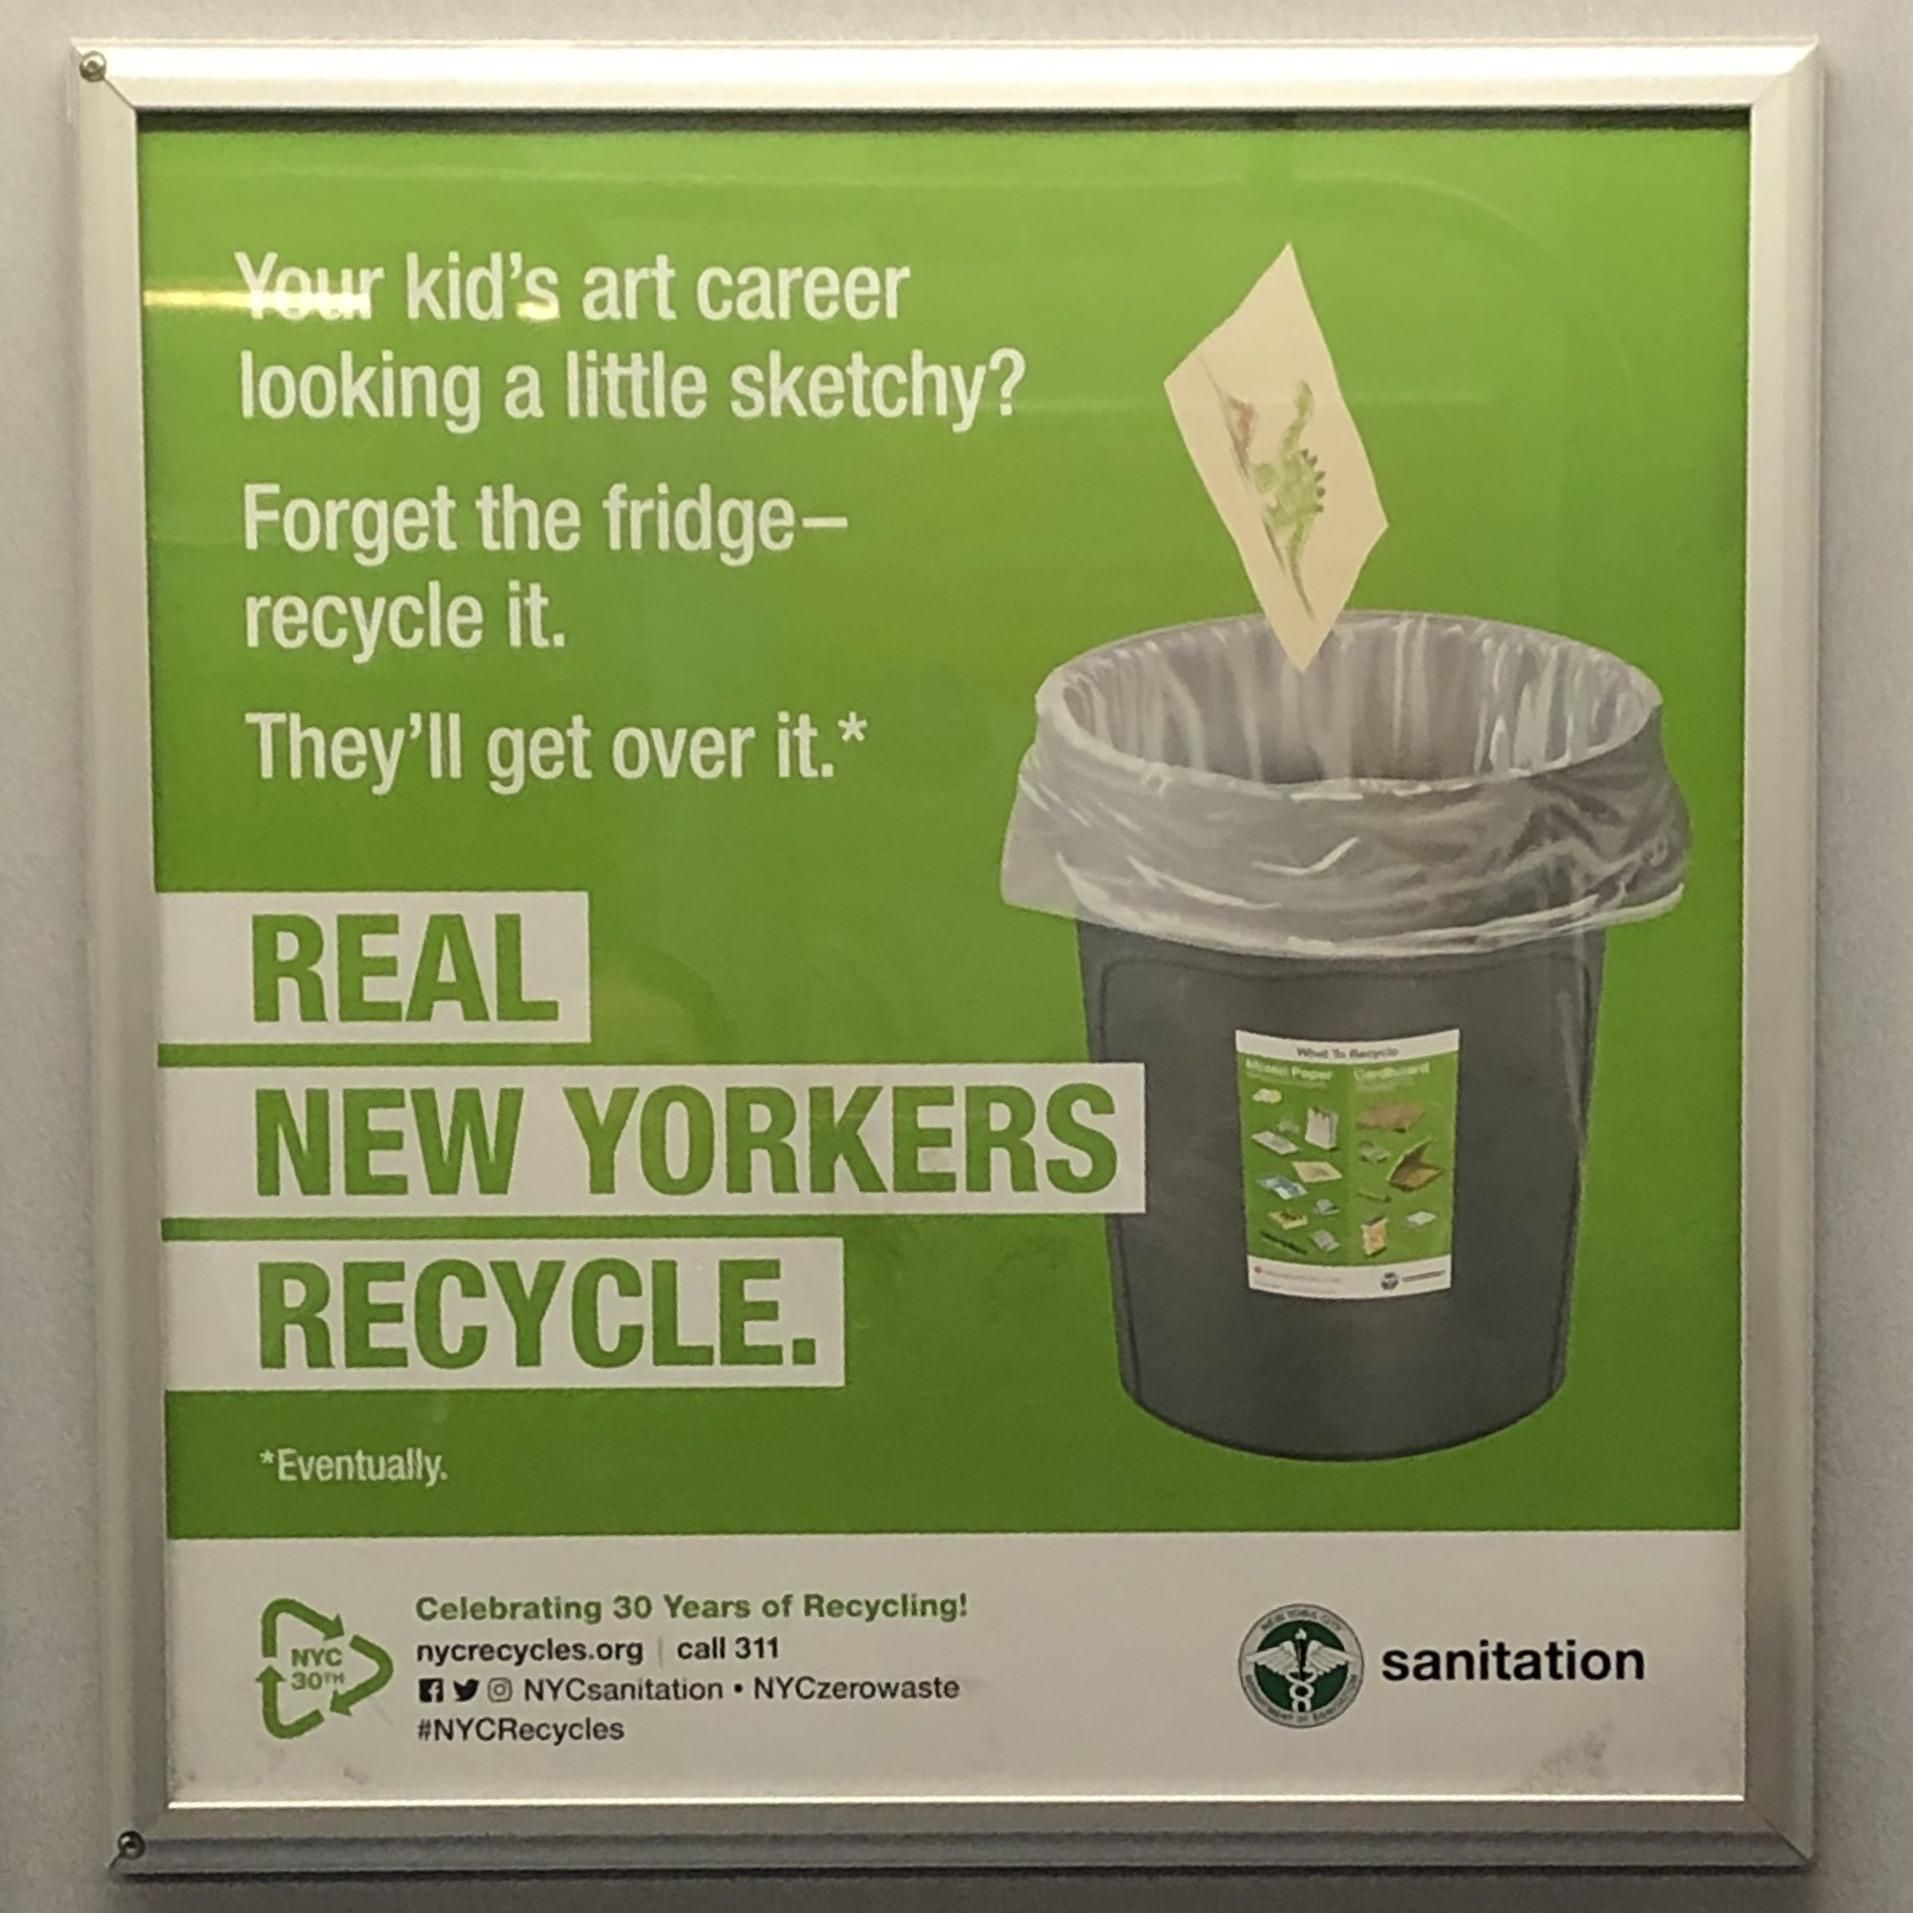 Who hurt you NYC Sanitation copy writer?